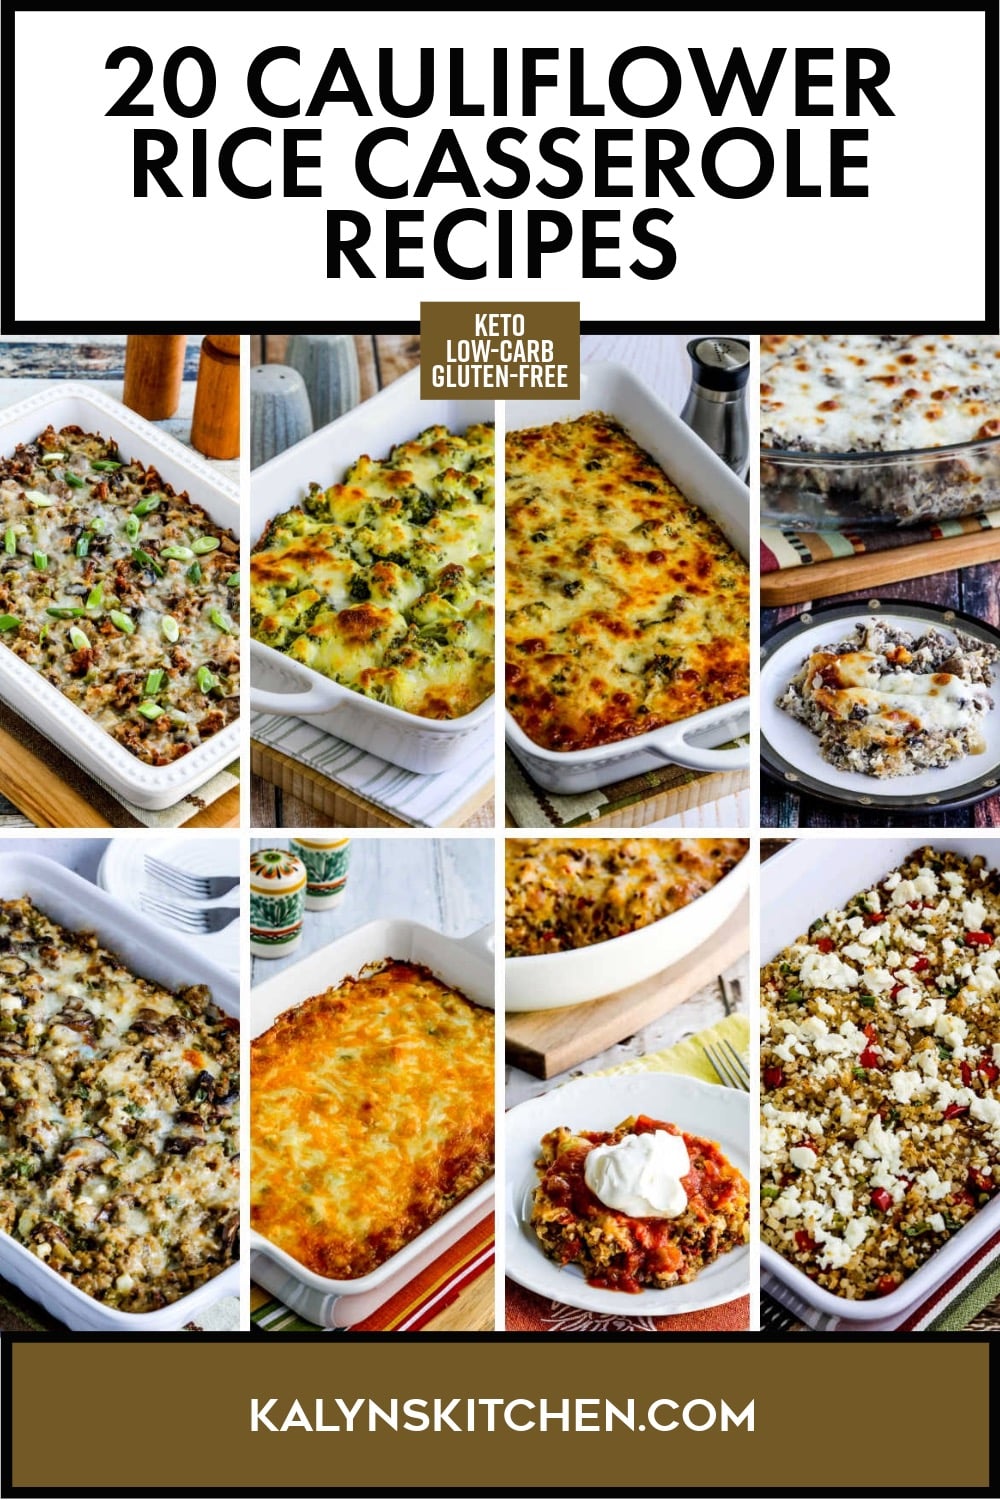 Pinterest image of 20 Cauliflower Rice Casserole Recipes